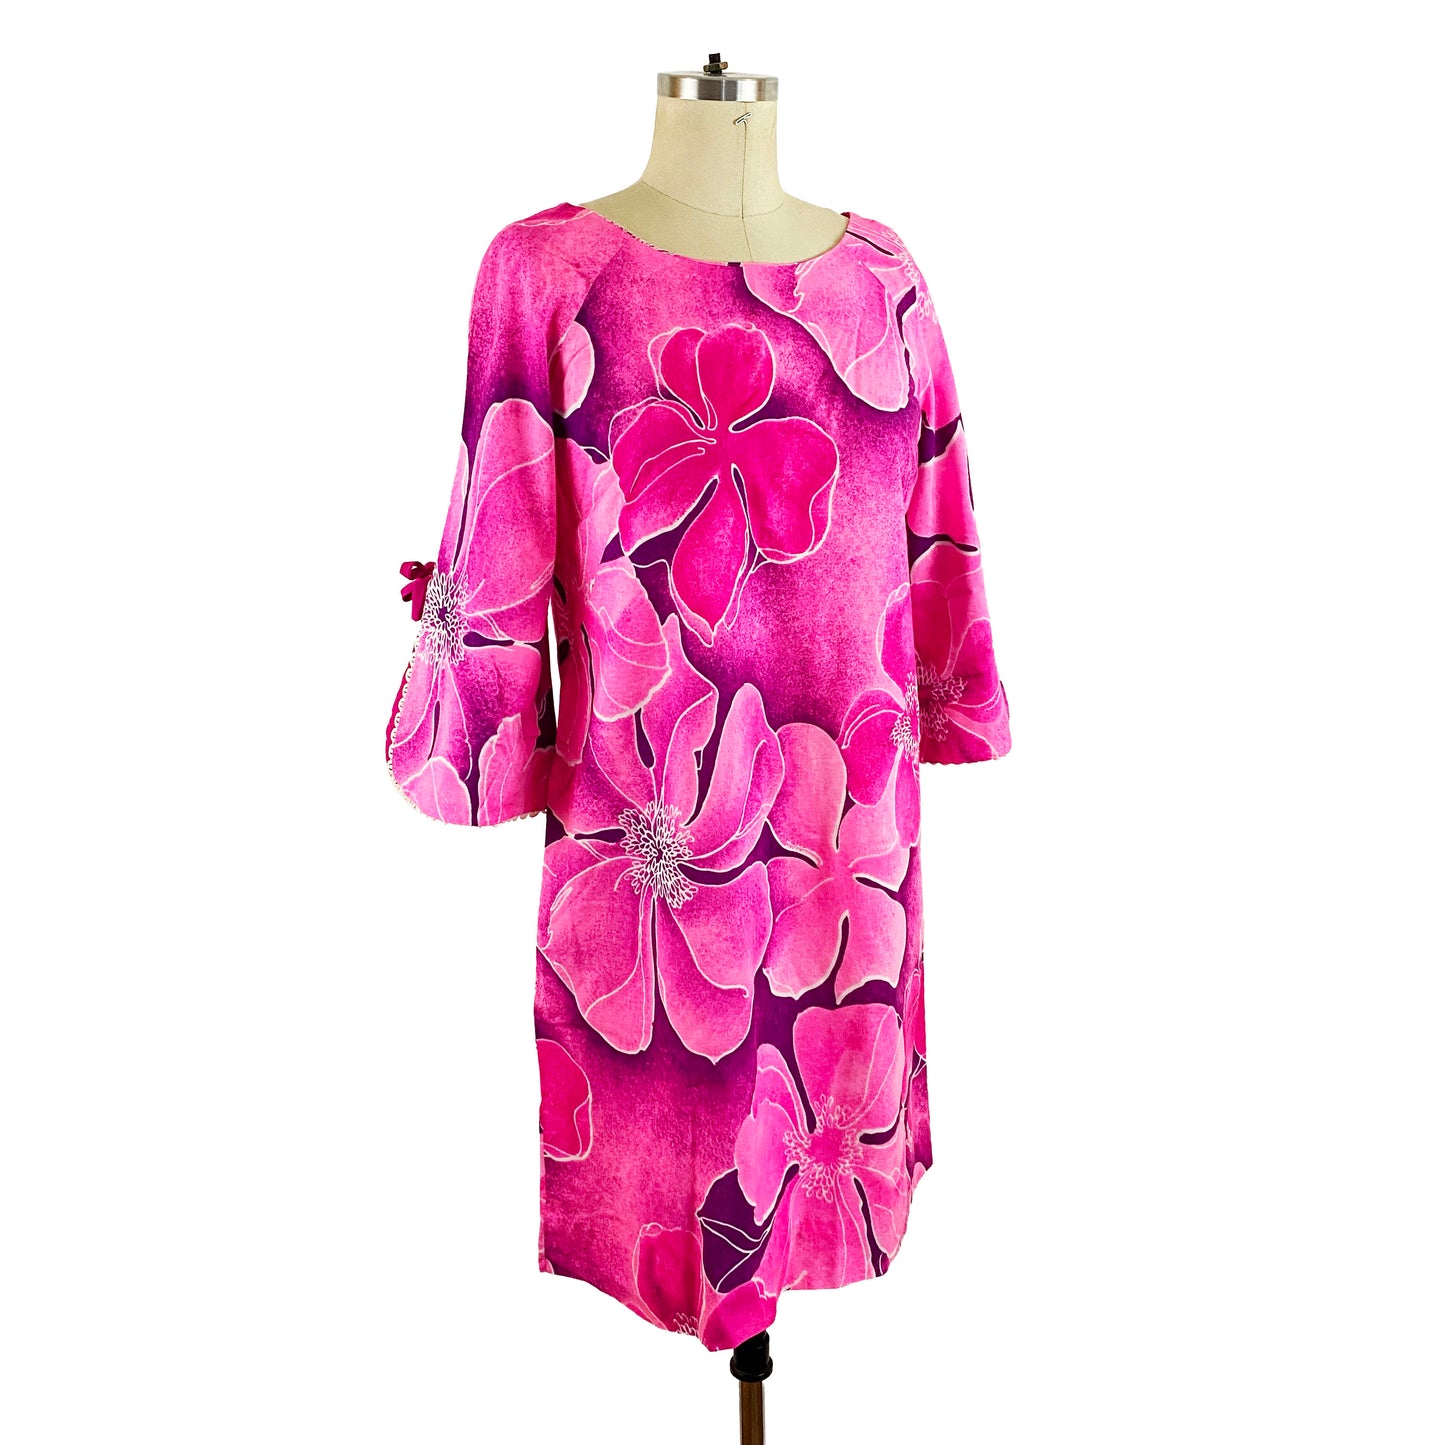 1970s Hoaloha Neon Pink Hibiscus Floral Hawaiian Dress Bell Sleeves Mod Tiki Mini Shift Dress 70s MuuMuu Retro Vintage / Size Medium